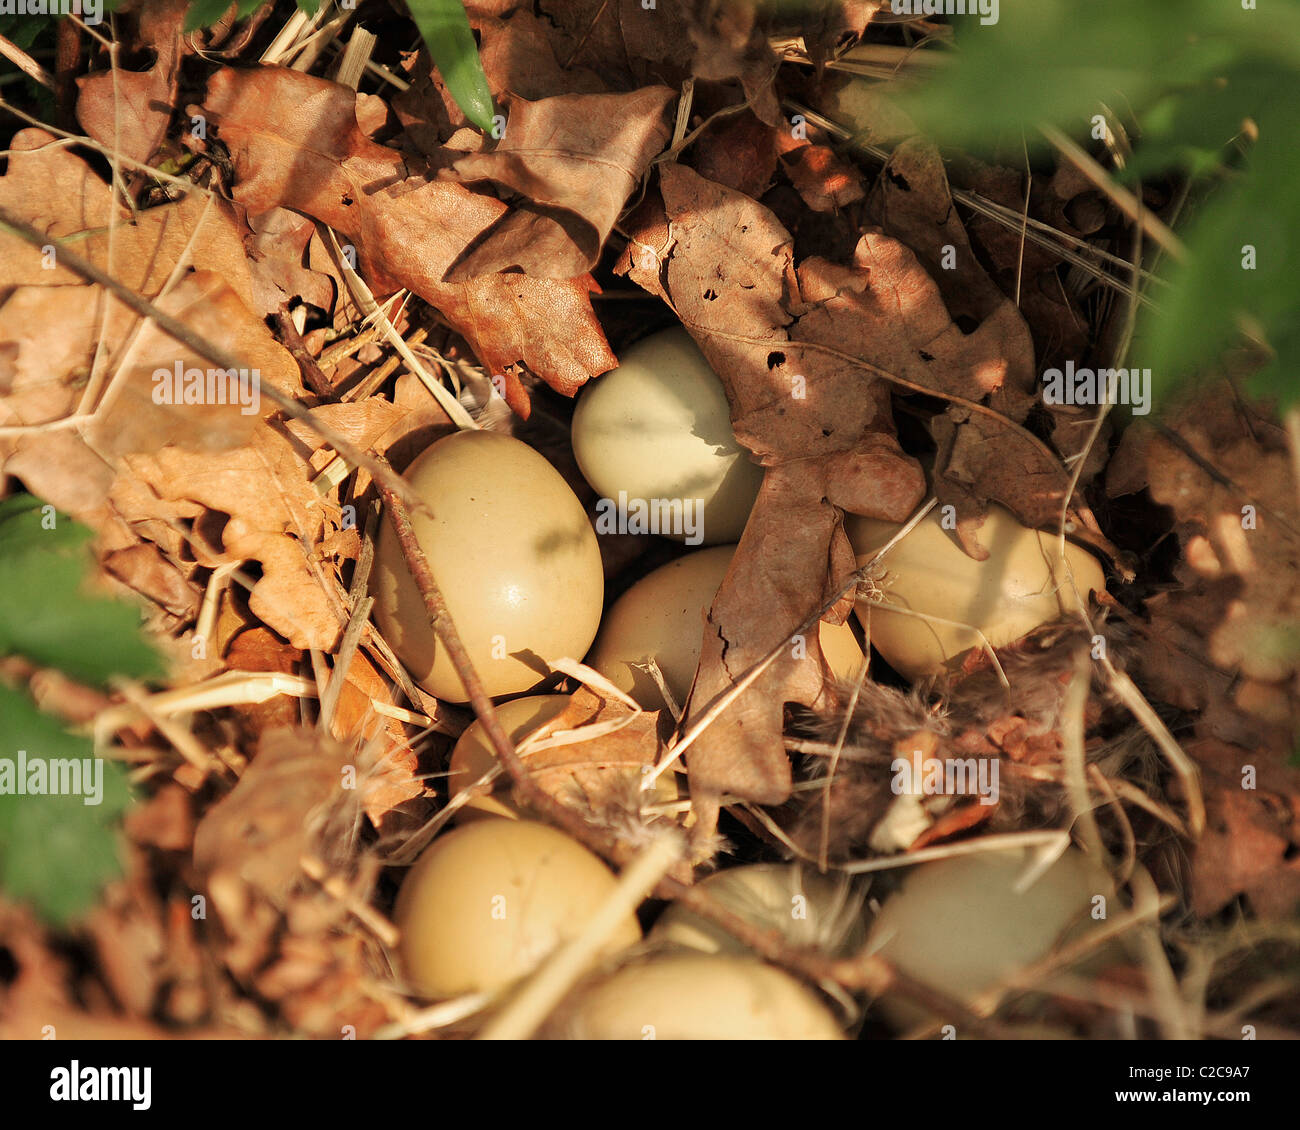 wild pheasant eggs in a nest Stock Photo